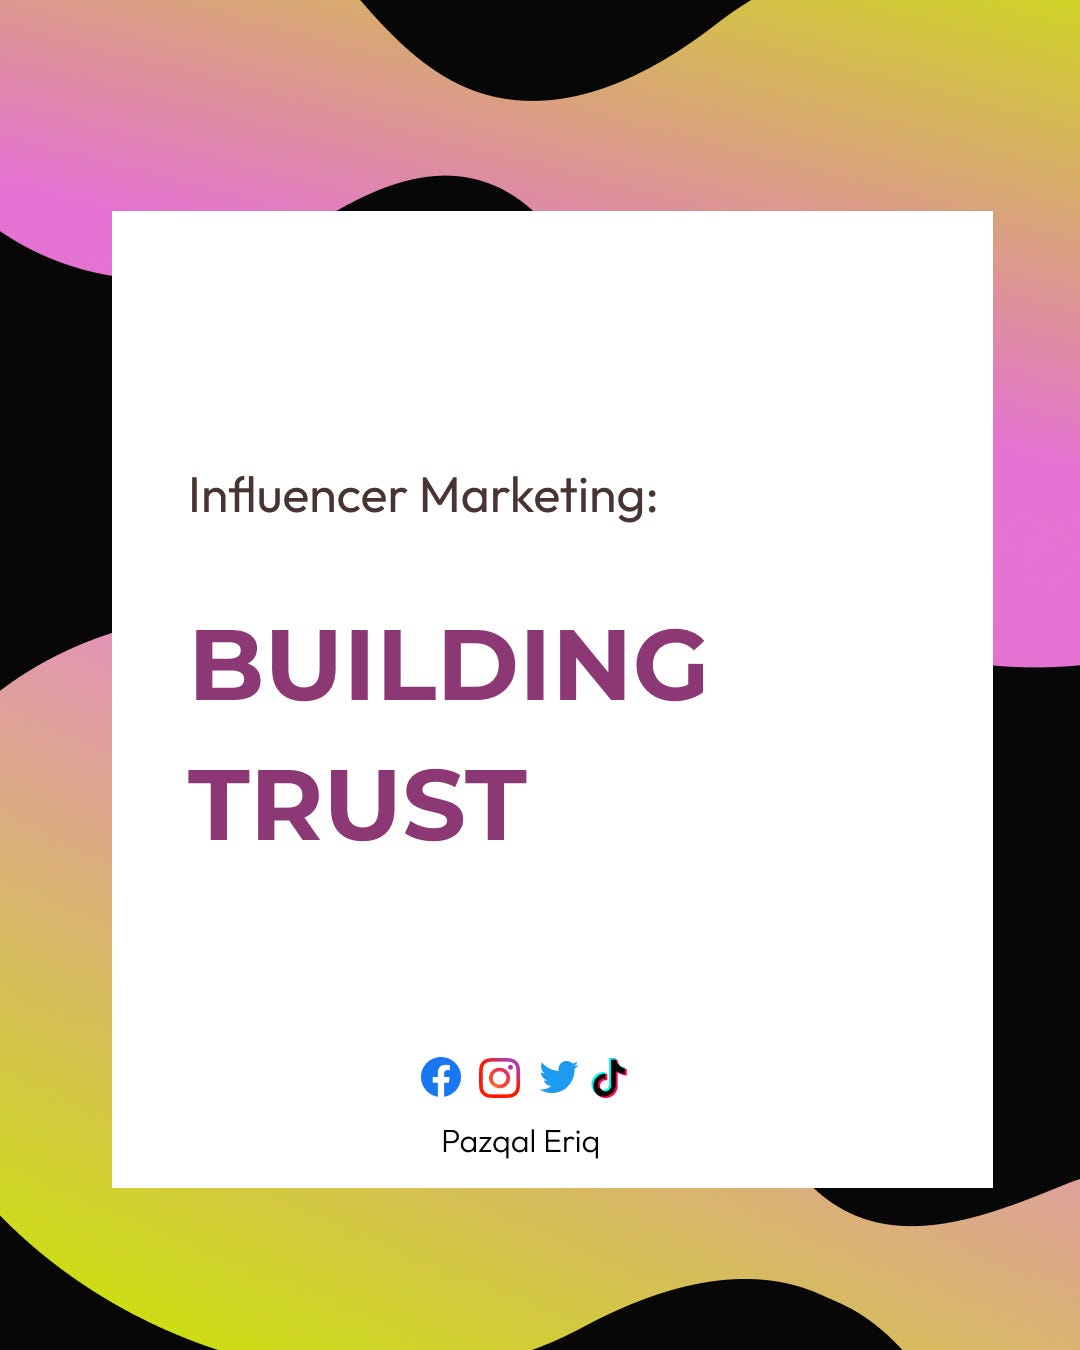 Influencer Marketing: Building Trust